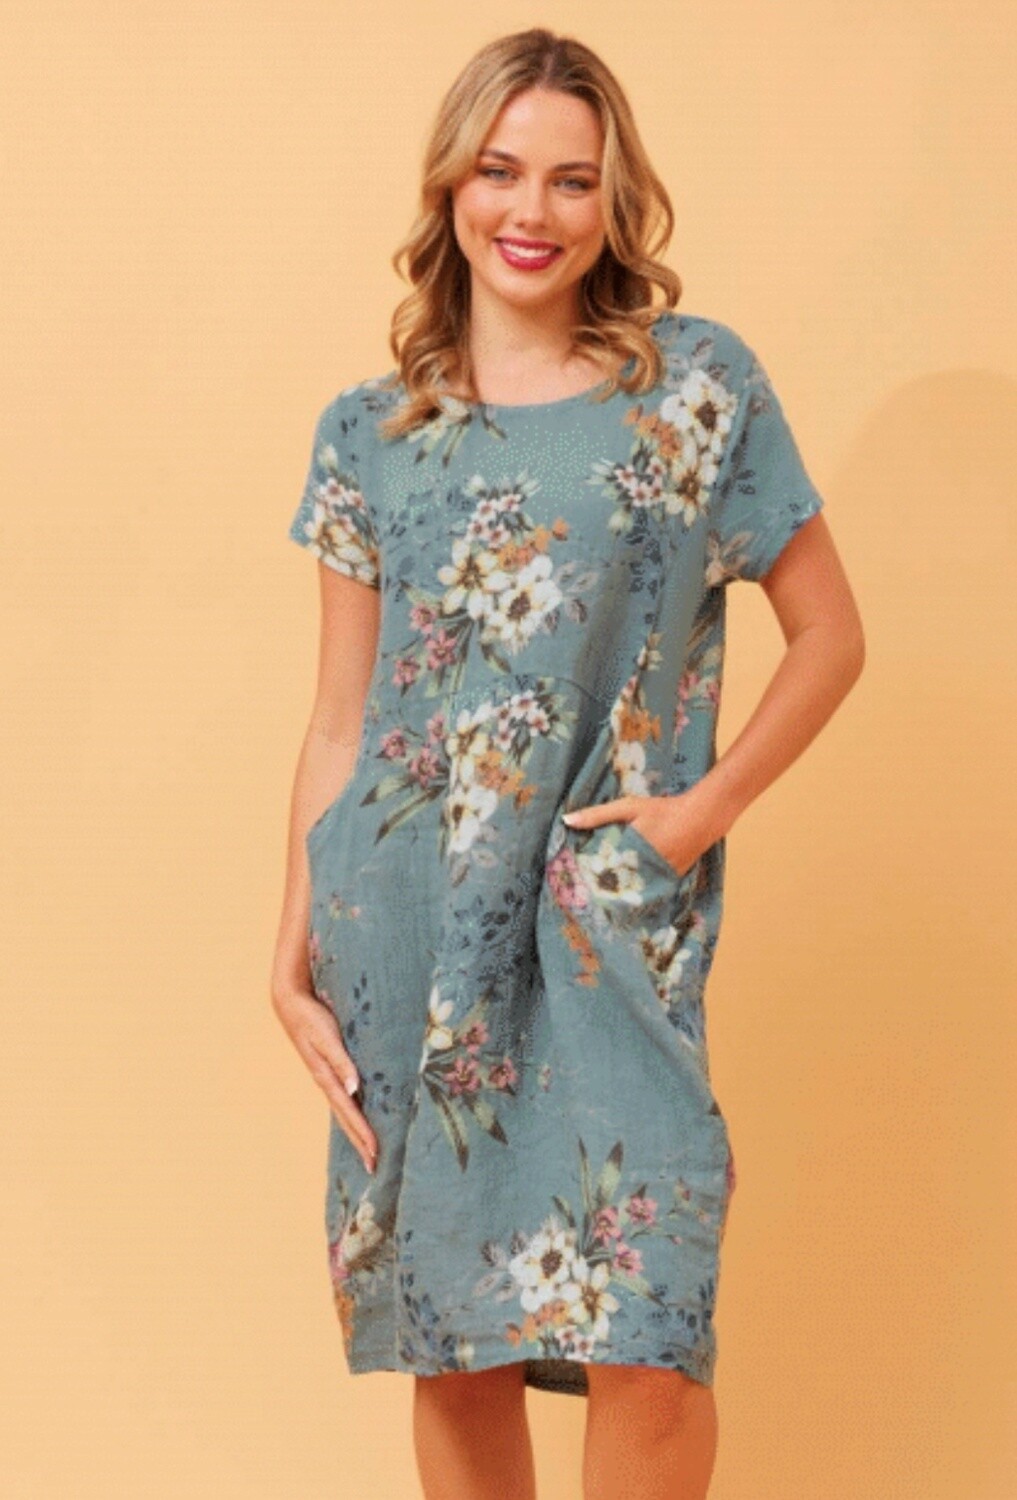 Bottega Moda Short Sleeve Floral Dress D518534, Colour: Teal, Size: 8